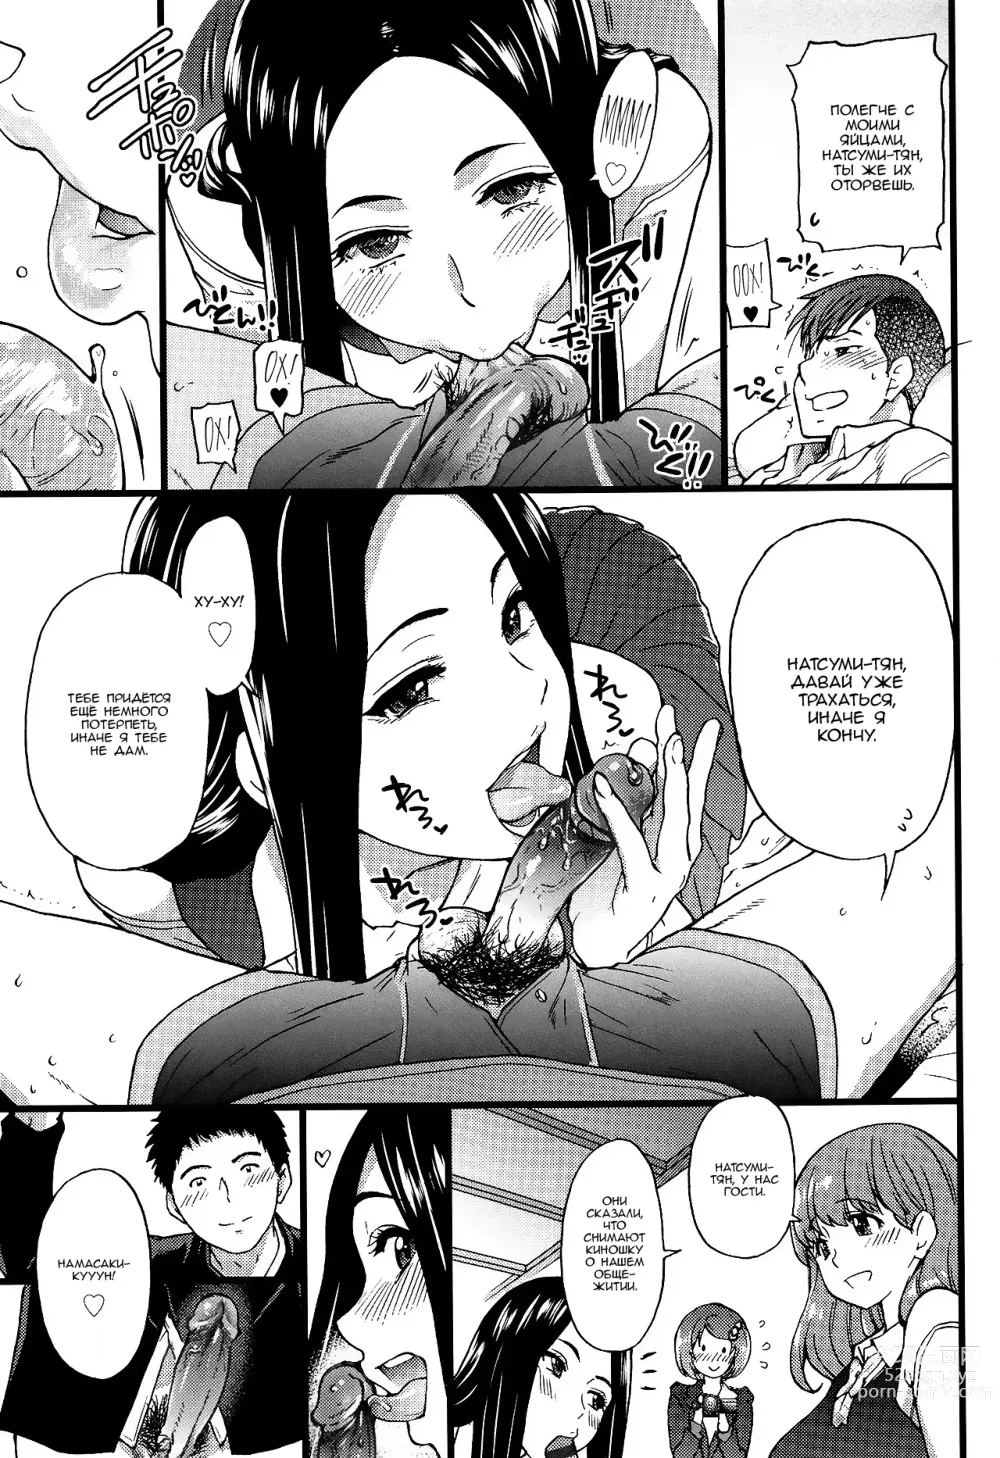 Page 157 of manga Ero Pippi 1-7